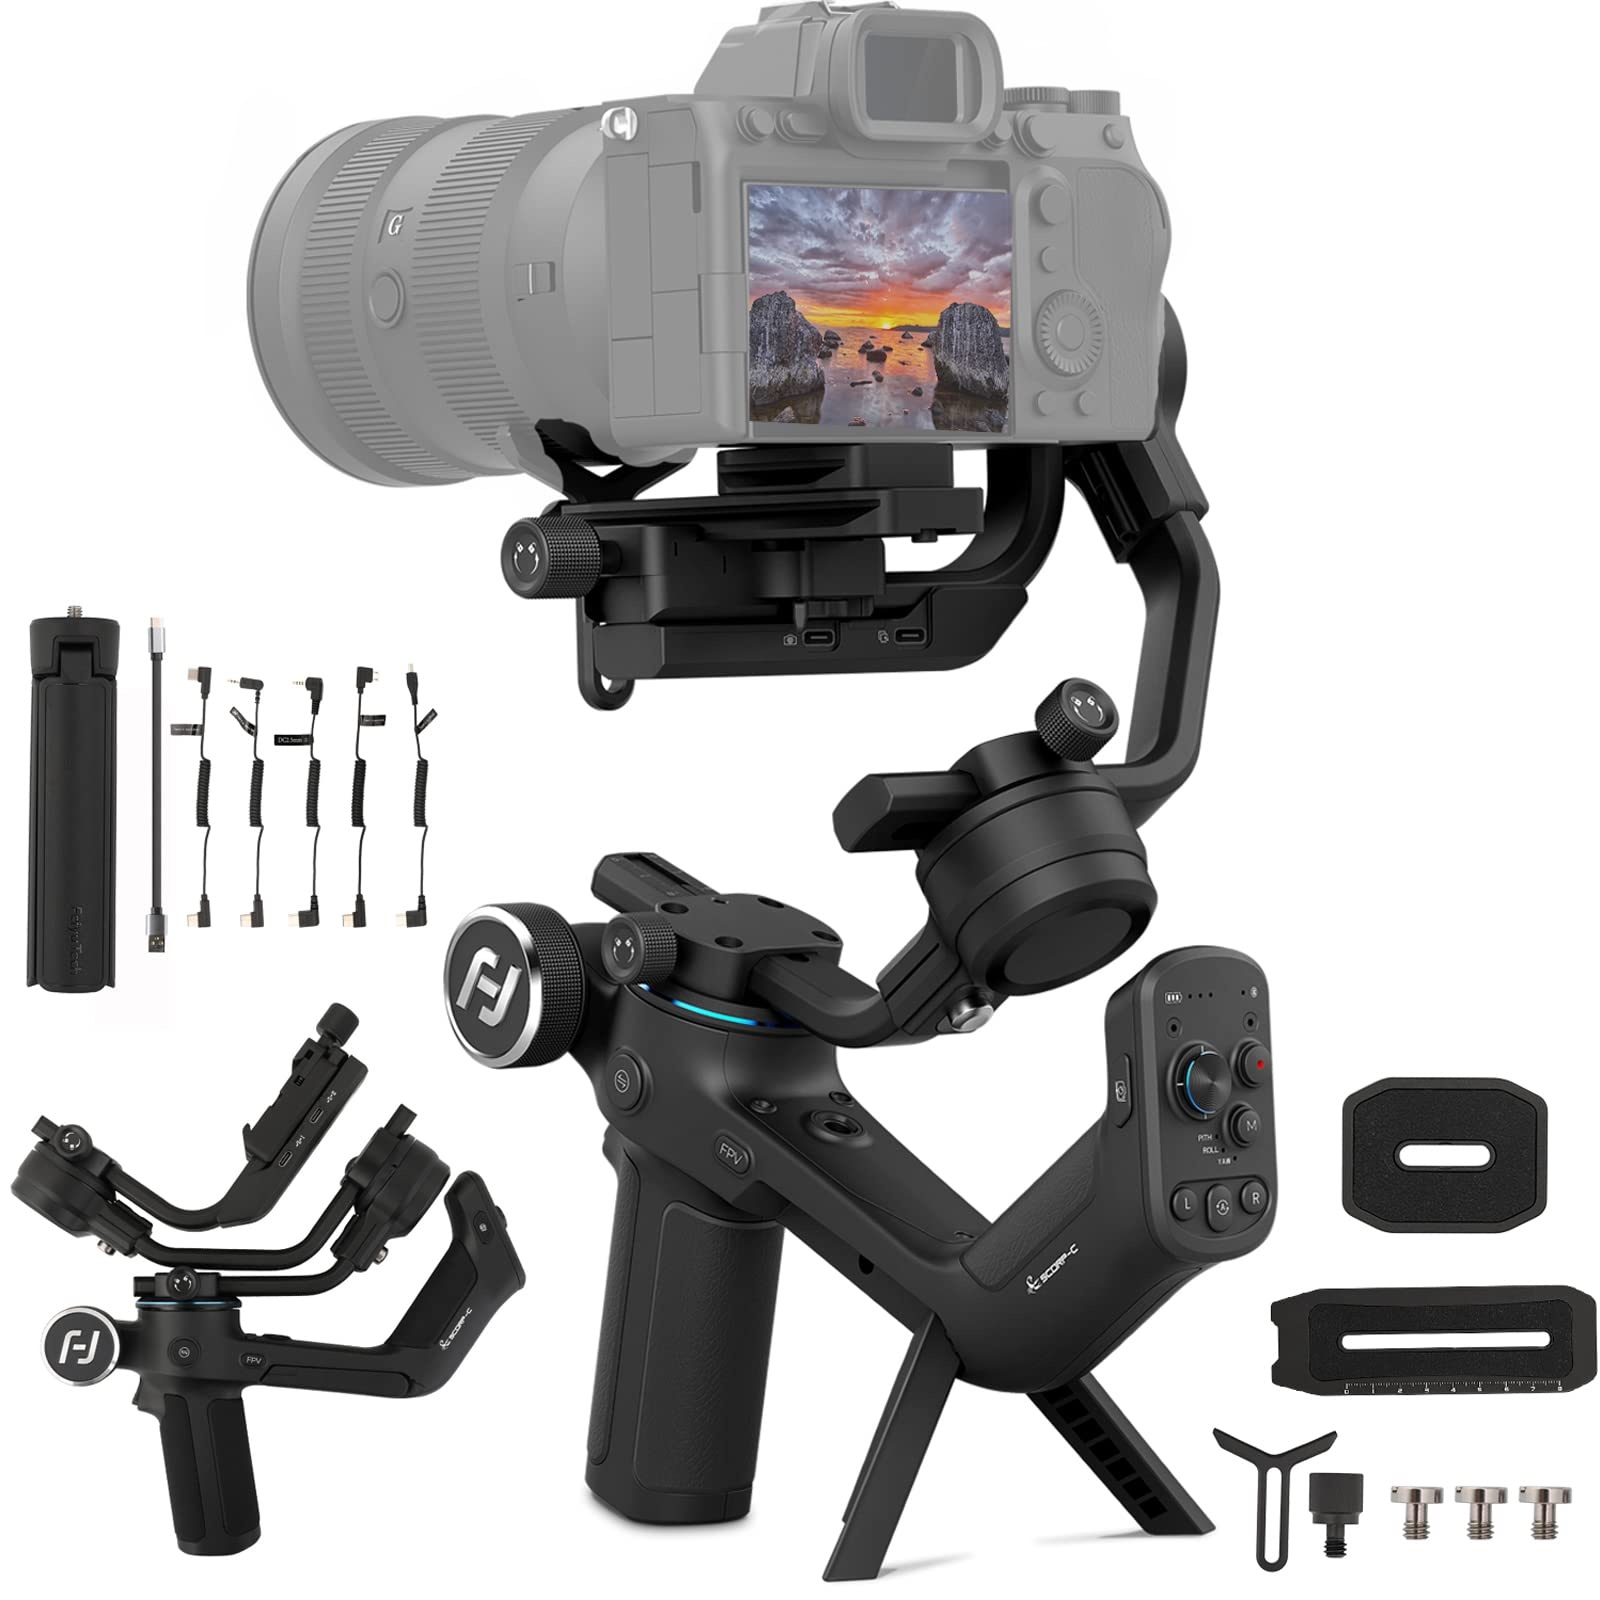 FeiyuTech SCORP-C Stabilisator Gimbal 3-Achsen für DSLR und Spiegellose Kameras,DSLR Gimbal kompatibel mit Sony/Canon/Panasonic/Lumix/Nikon/Fujifilm, 5.51lbs Zuladung mit Stativ